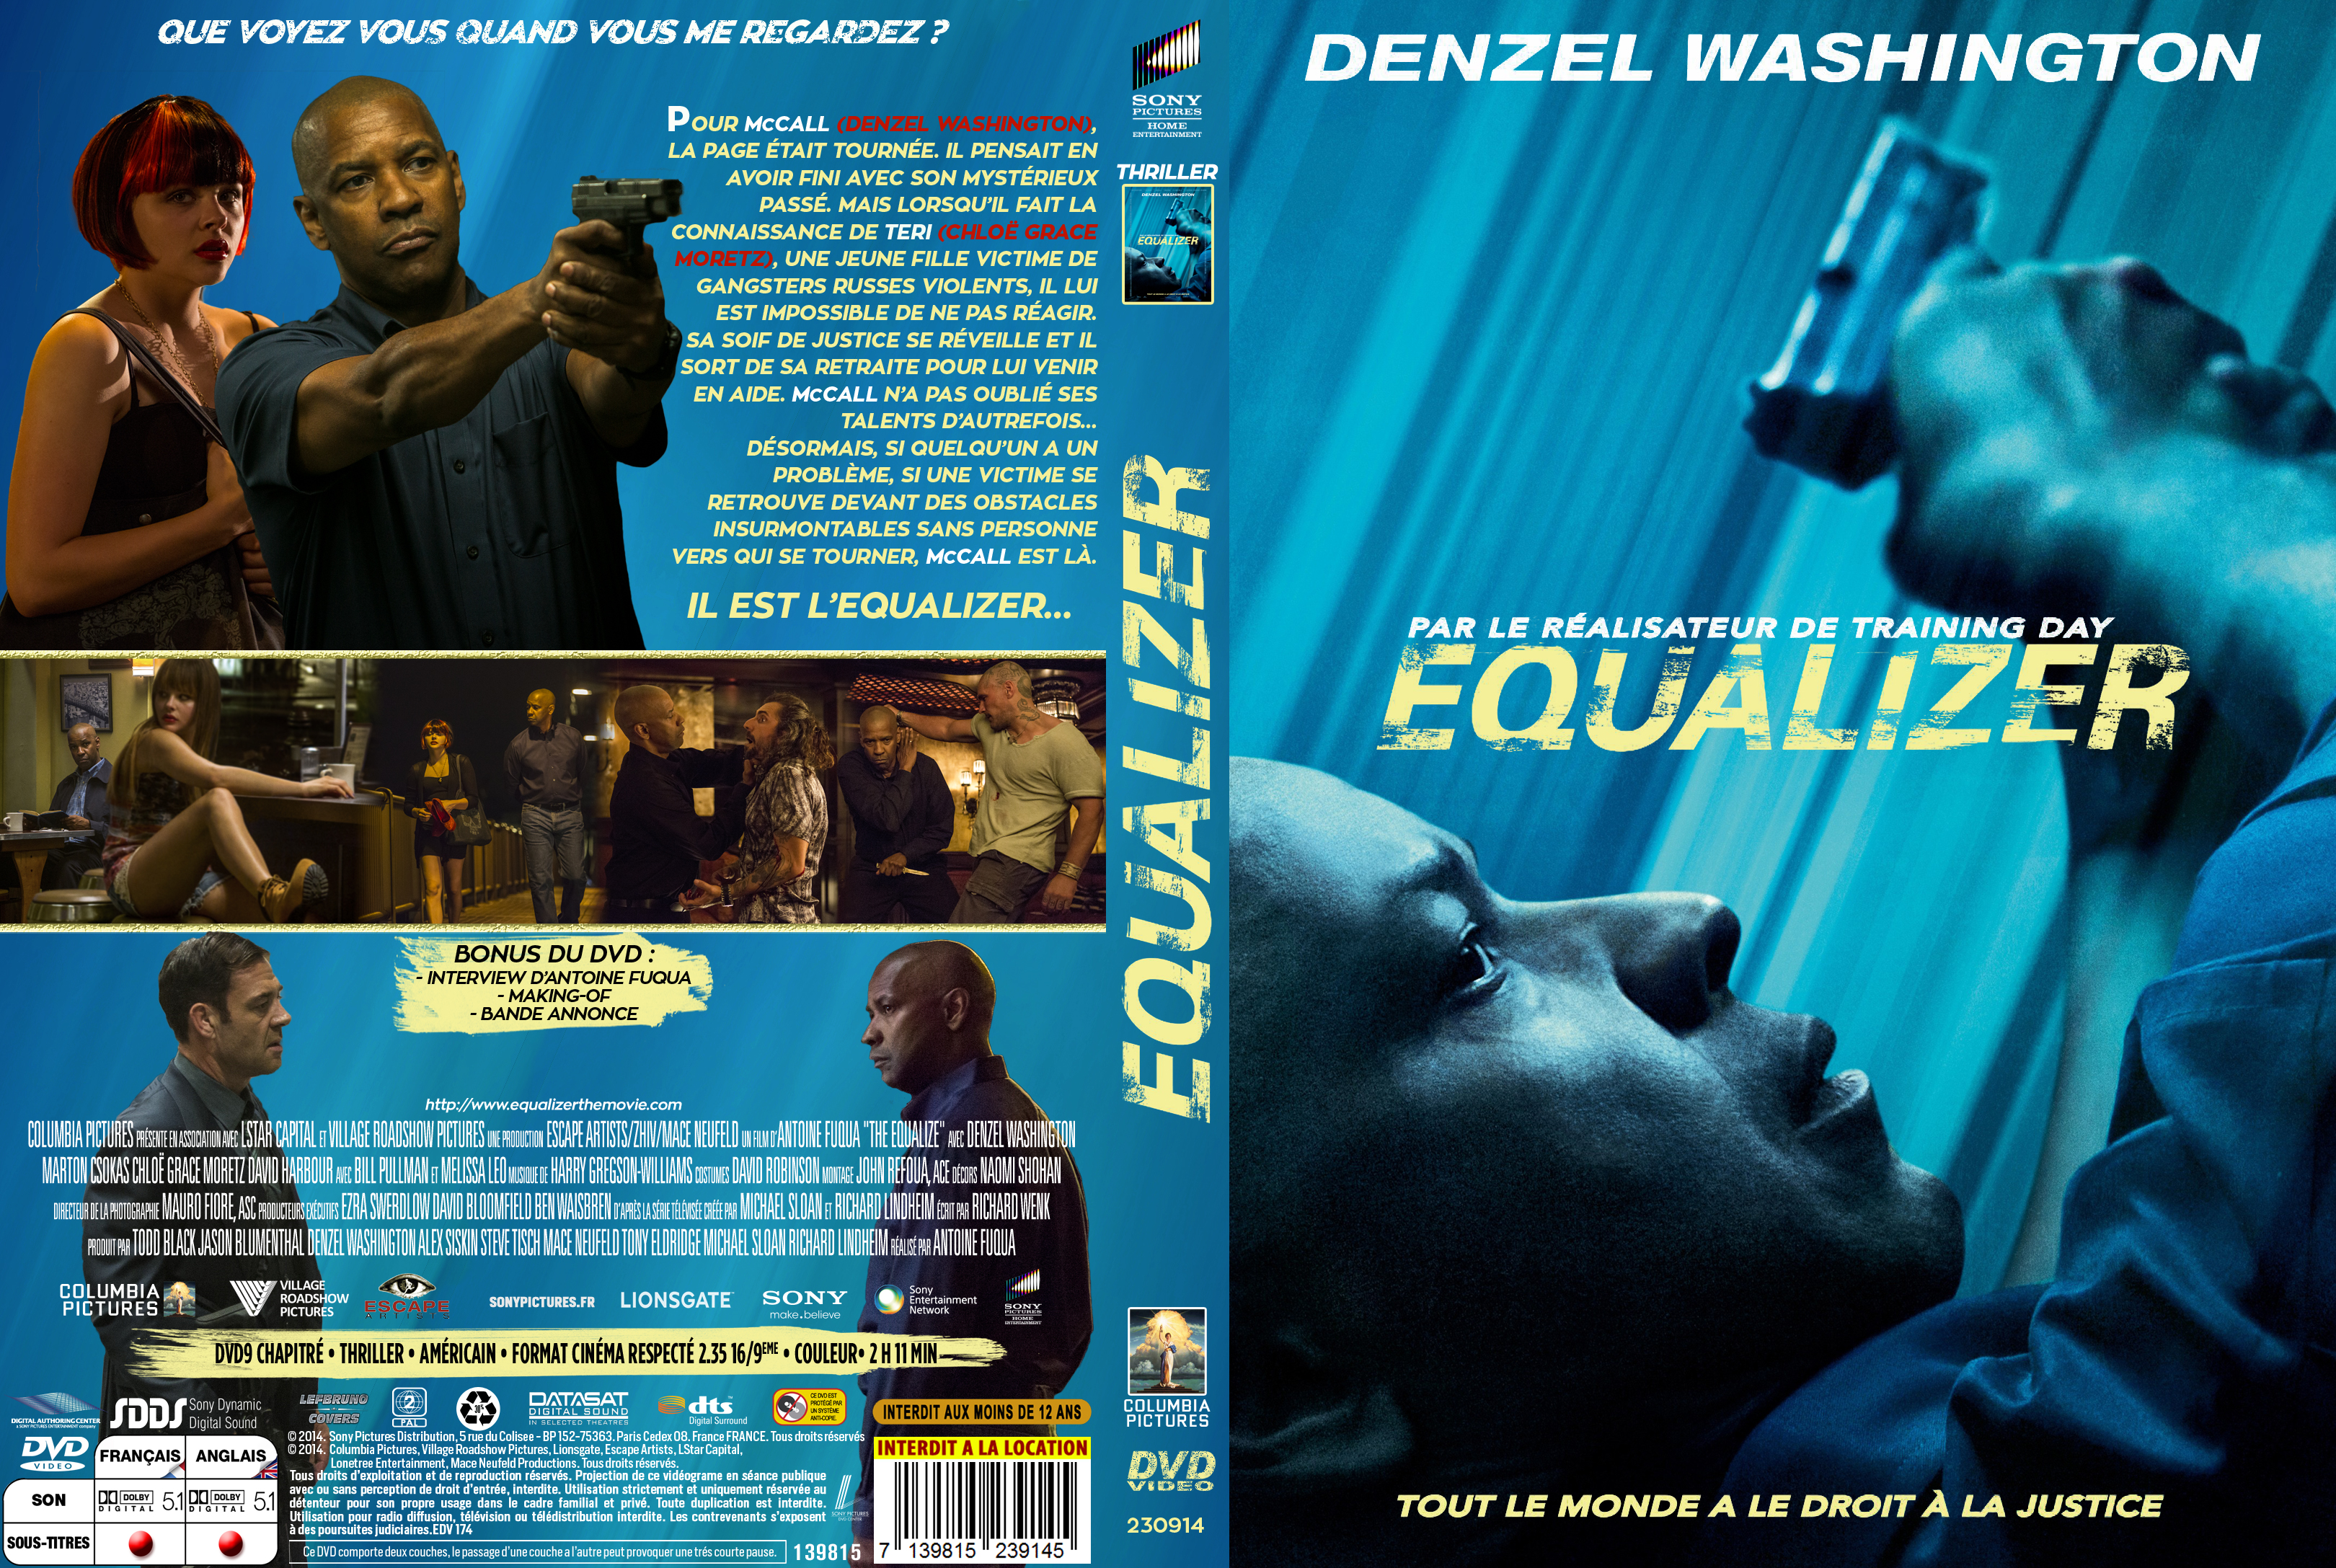 Jaquette DVD Equalizer custom